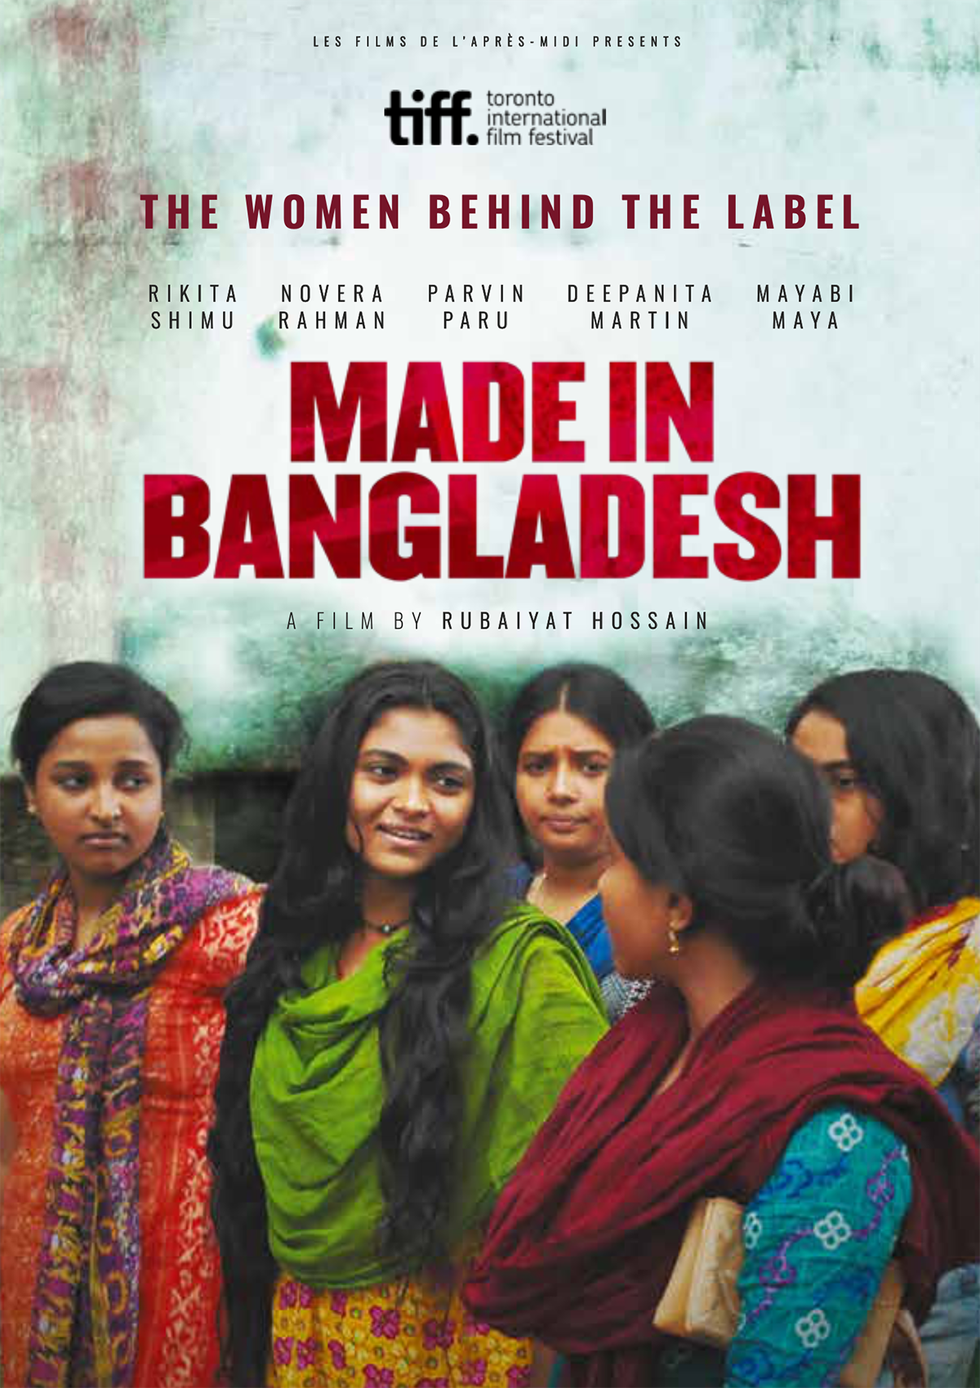 la locandina di ﻿﻿made in bangladesh ﻿, della regista rubaiyat hossain